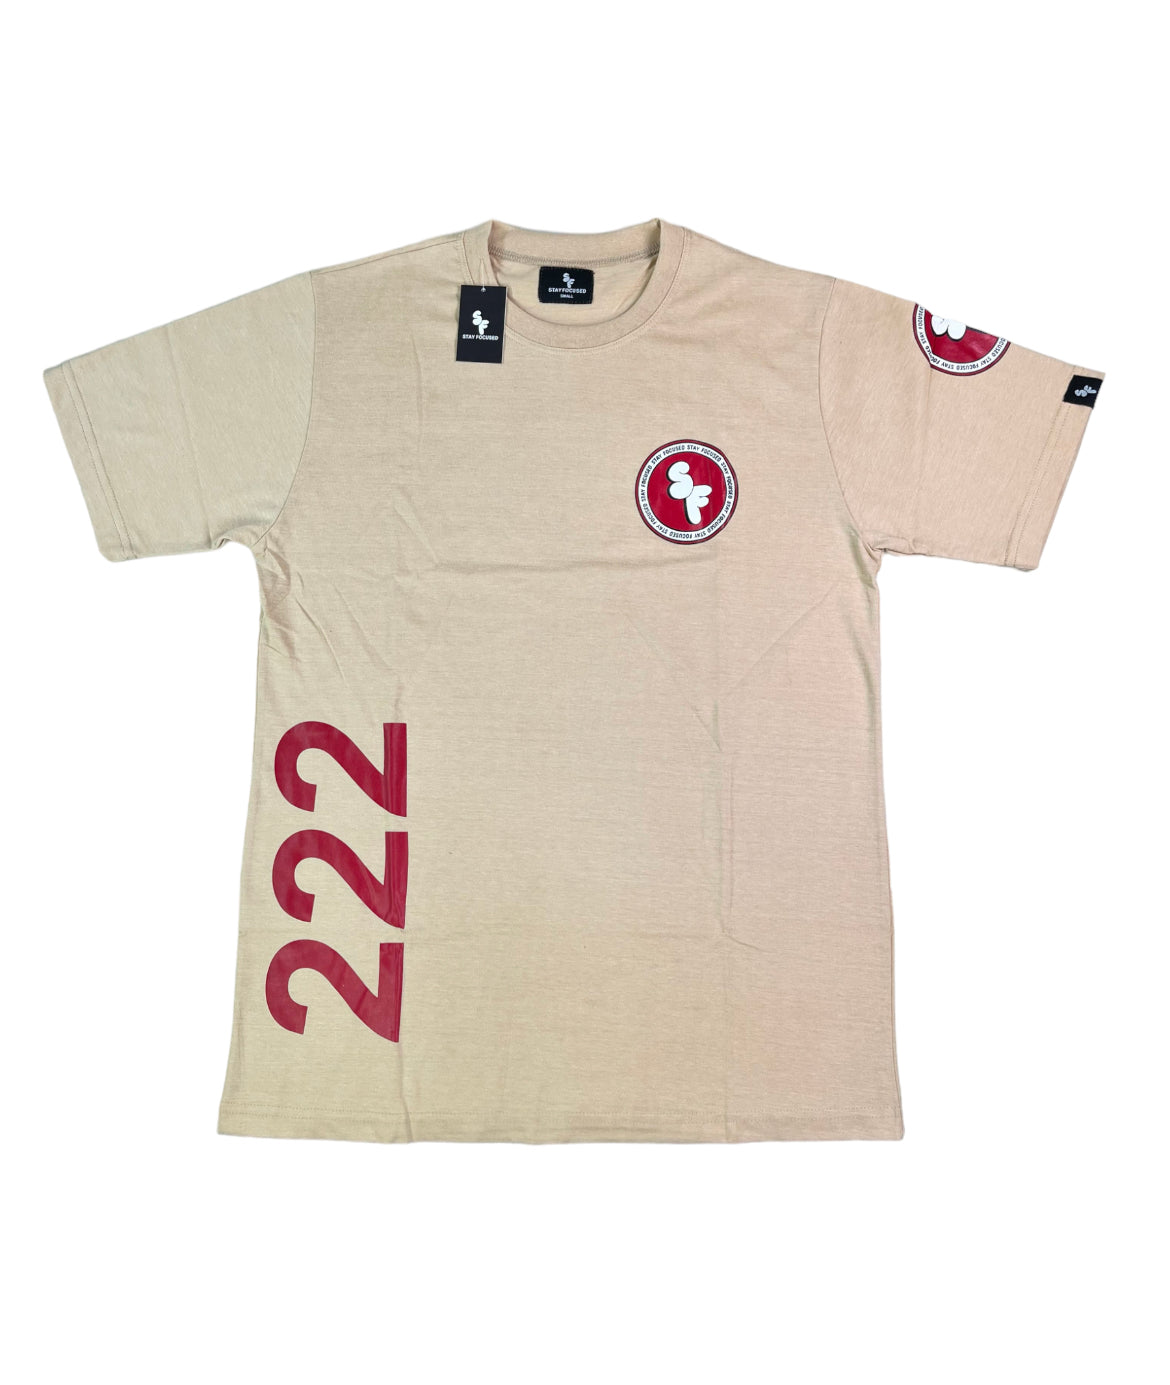 "222" Shirts